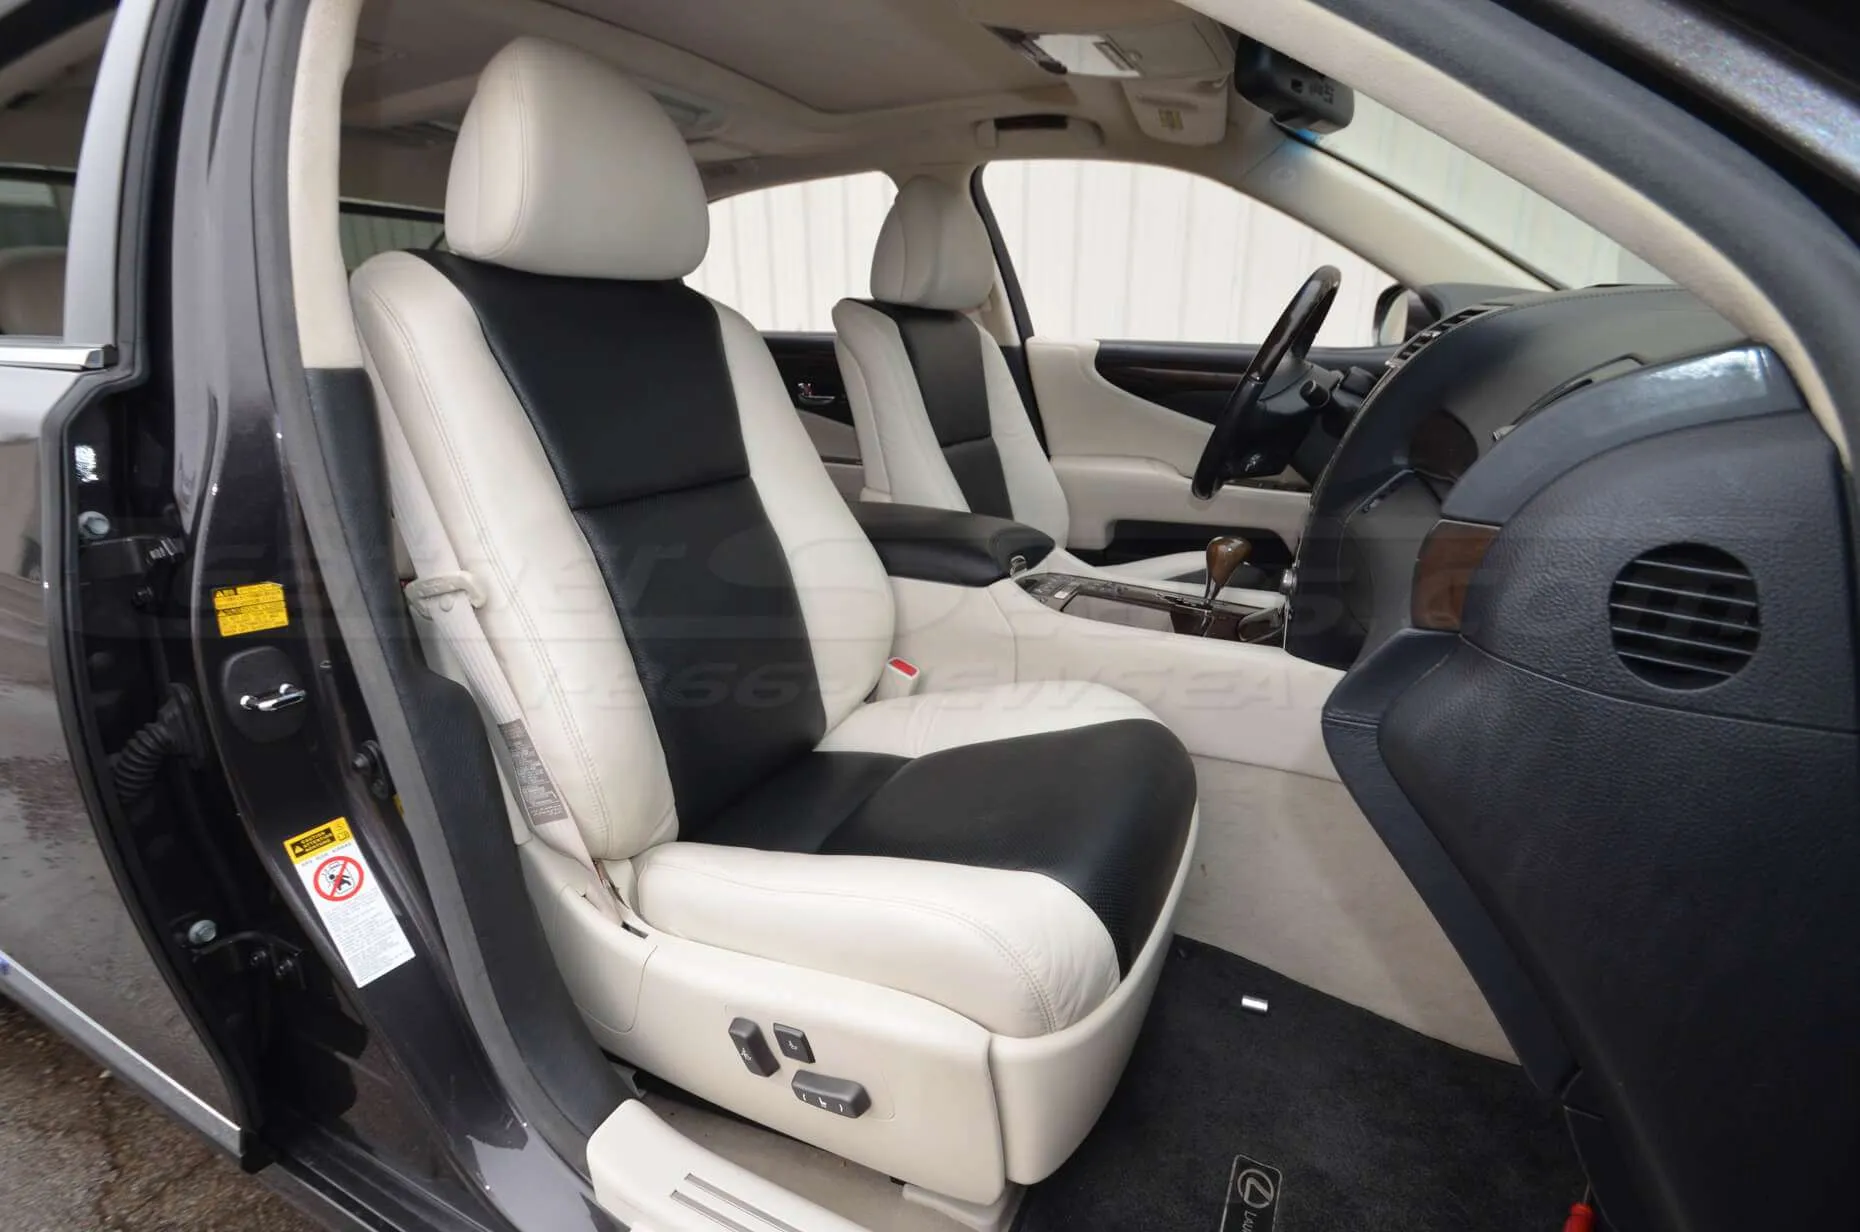 Lexus LS iLeather Seats - Installed - Front passenger seat